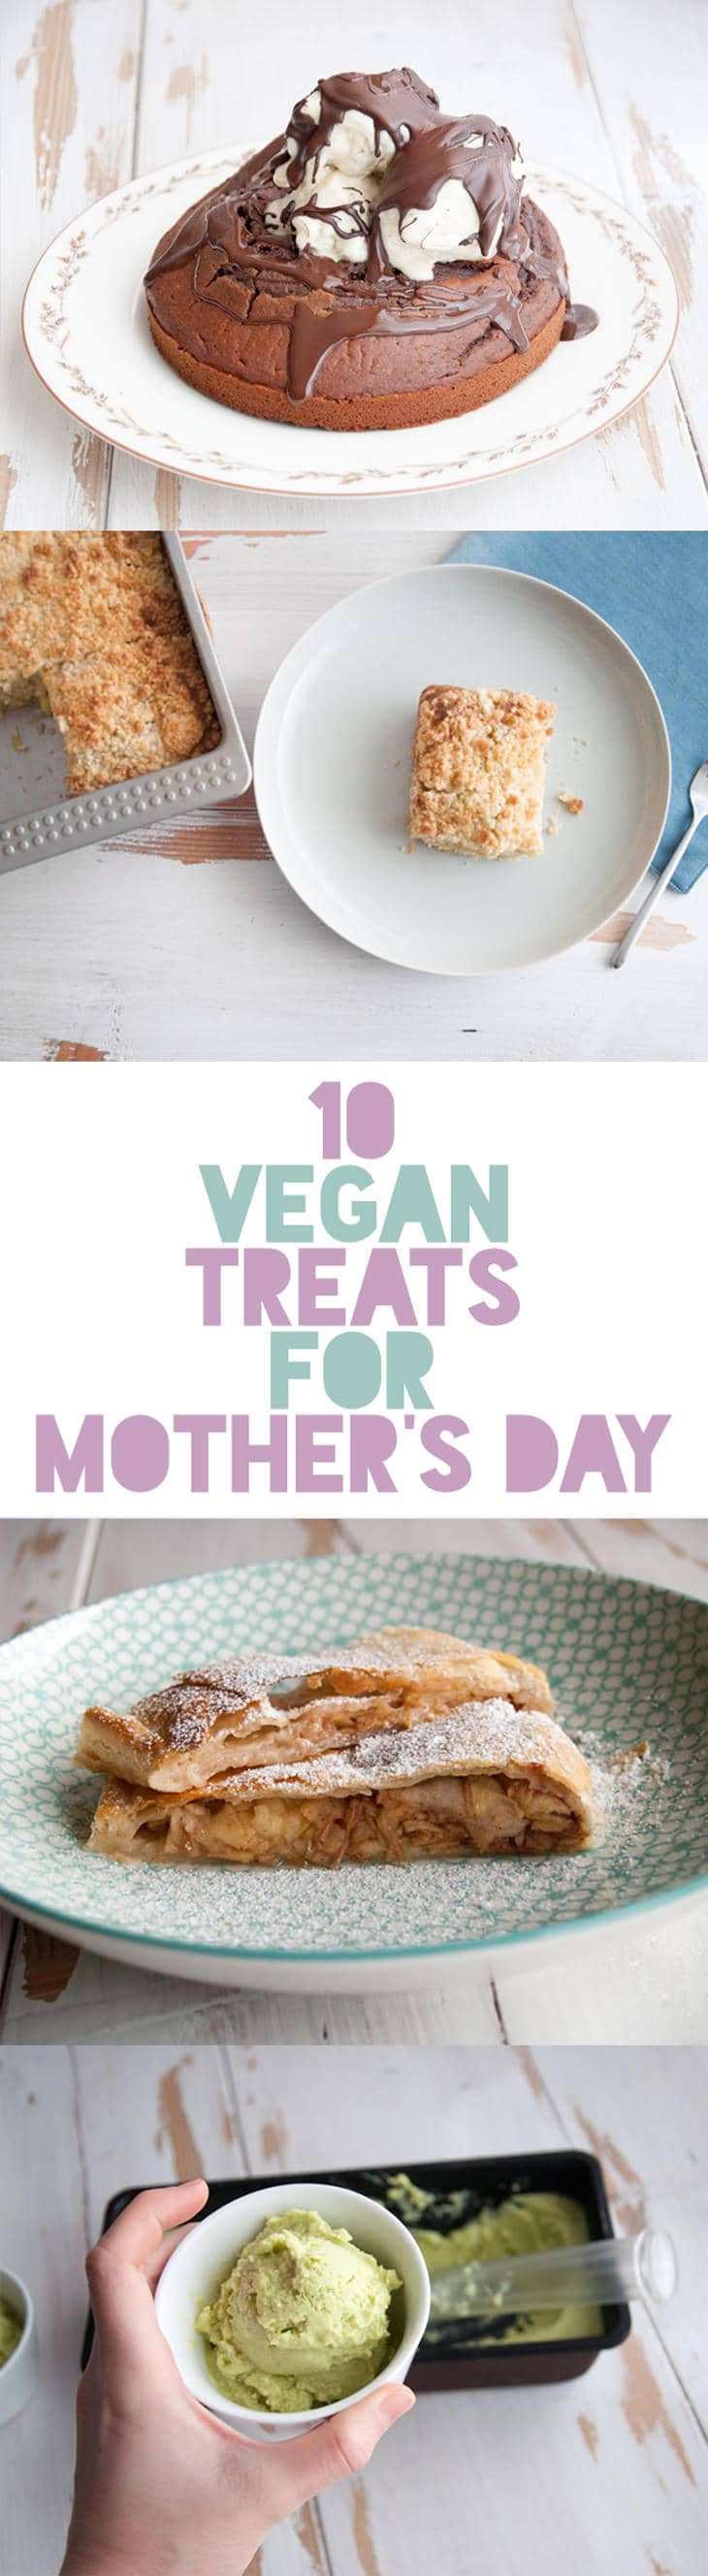 10 Vegan Treats for Mother's Day | ElephantasticVegan.com